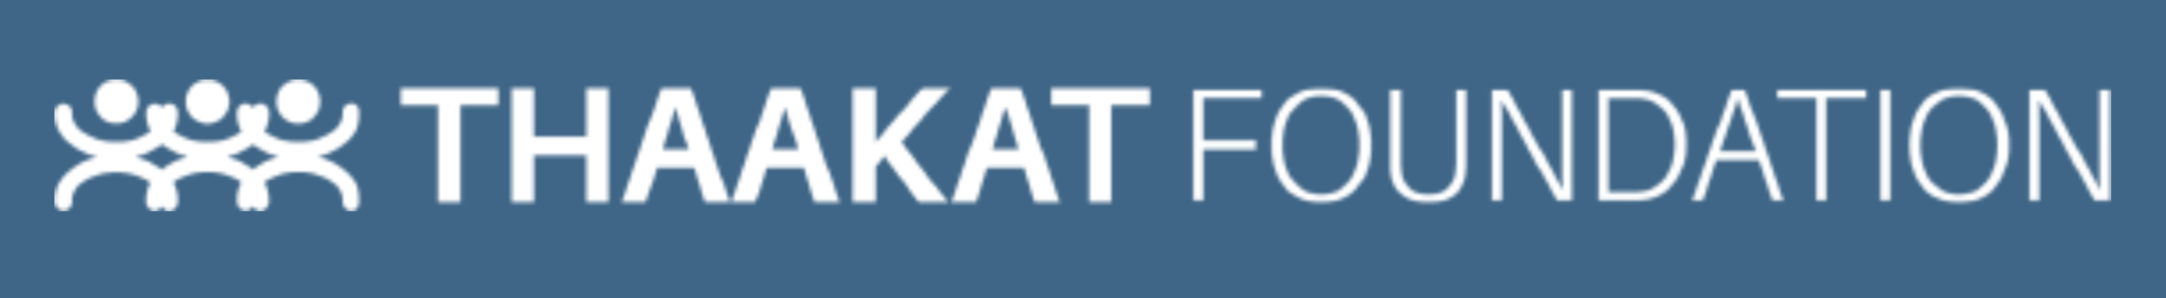 Thaakat Foundation logo